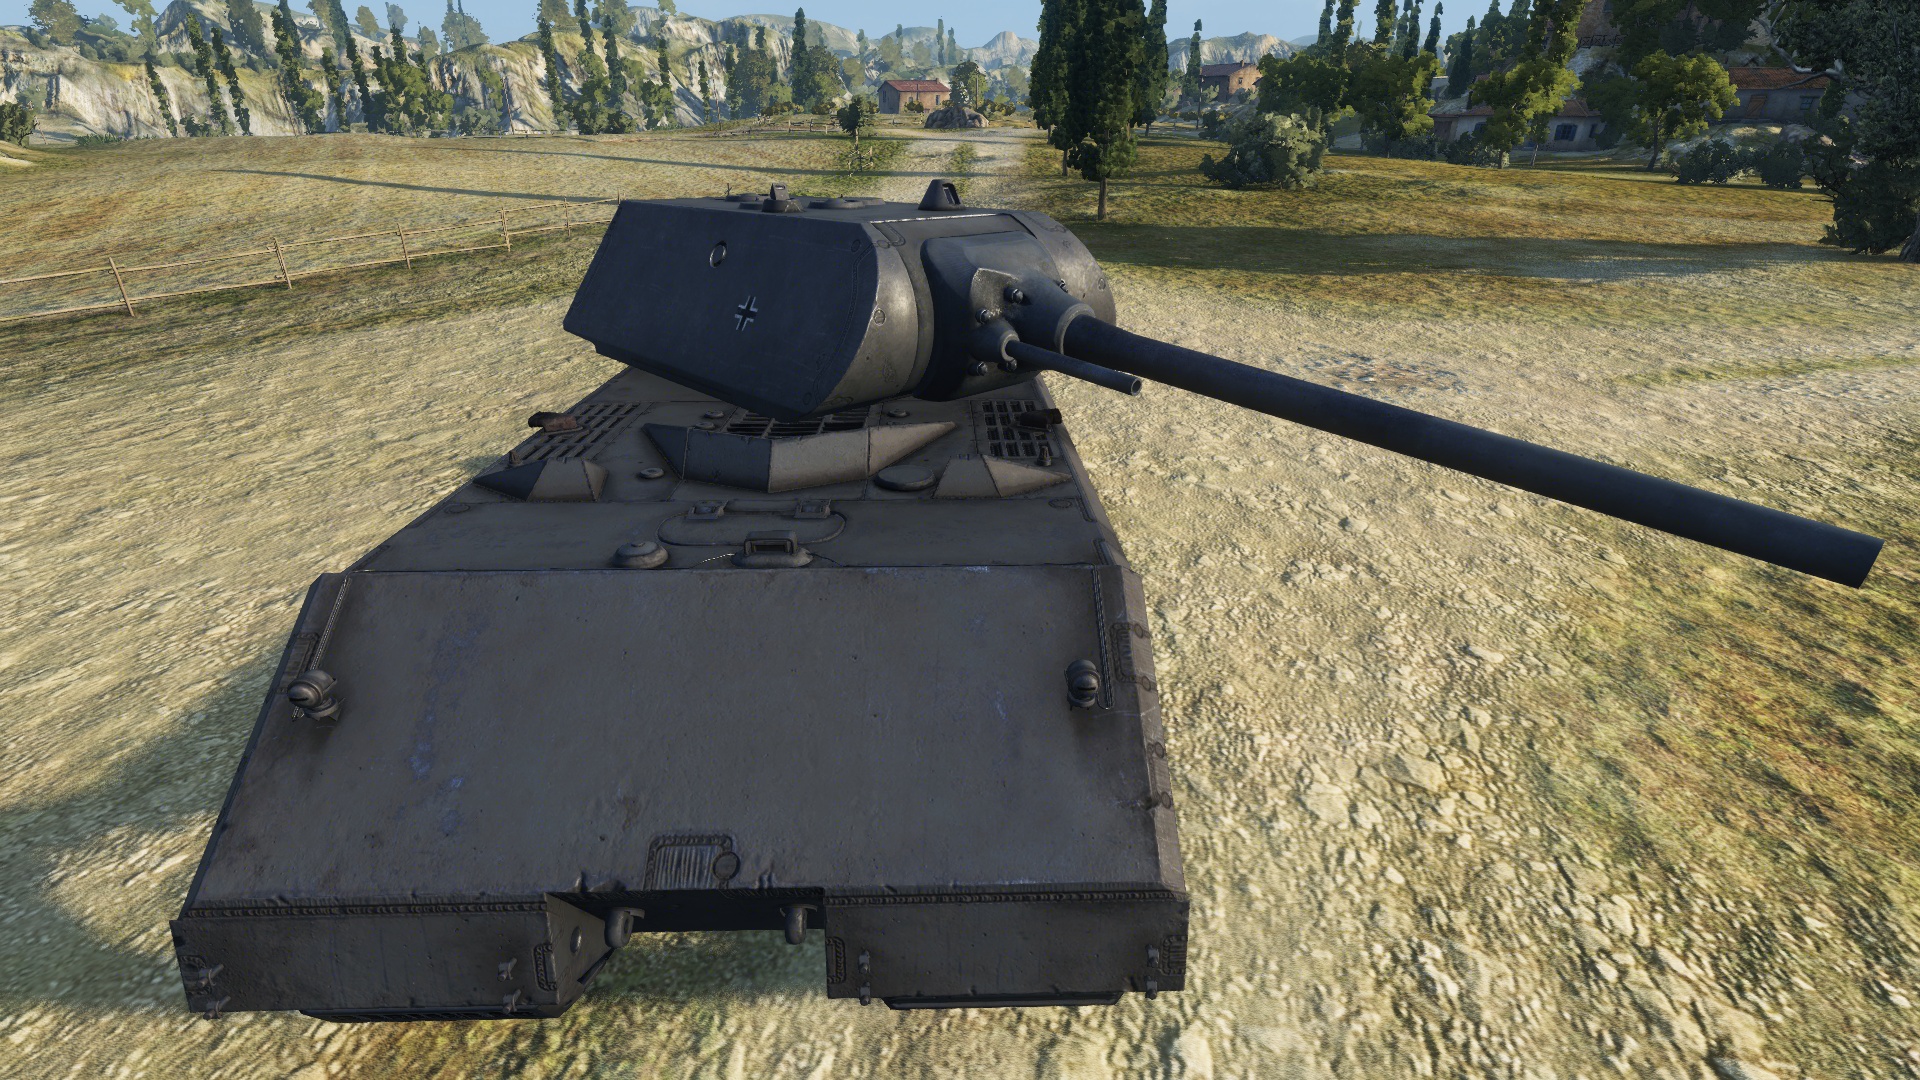 world of tanks matchmaking 9.0